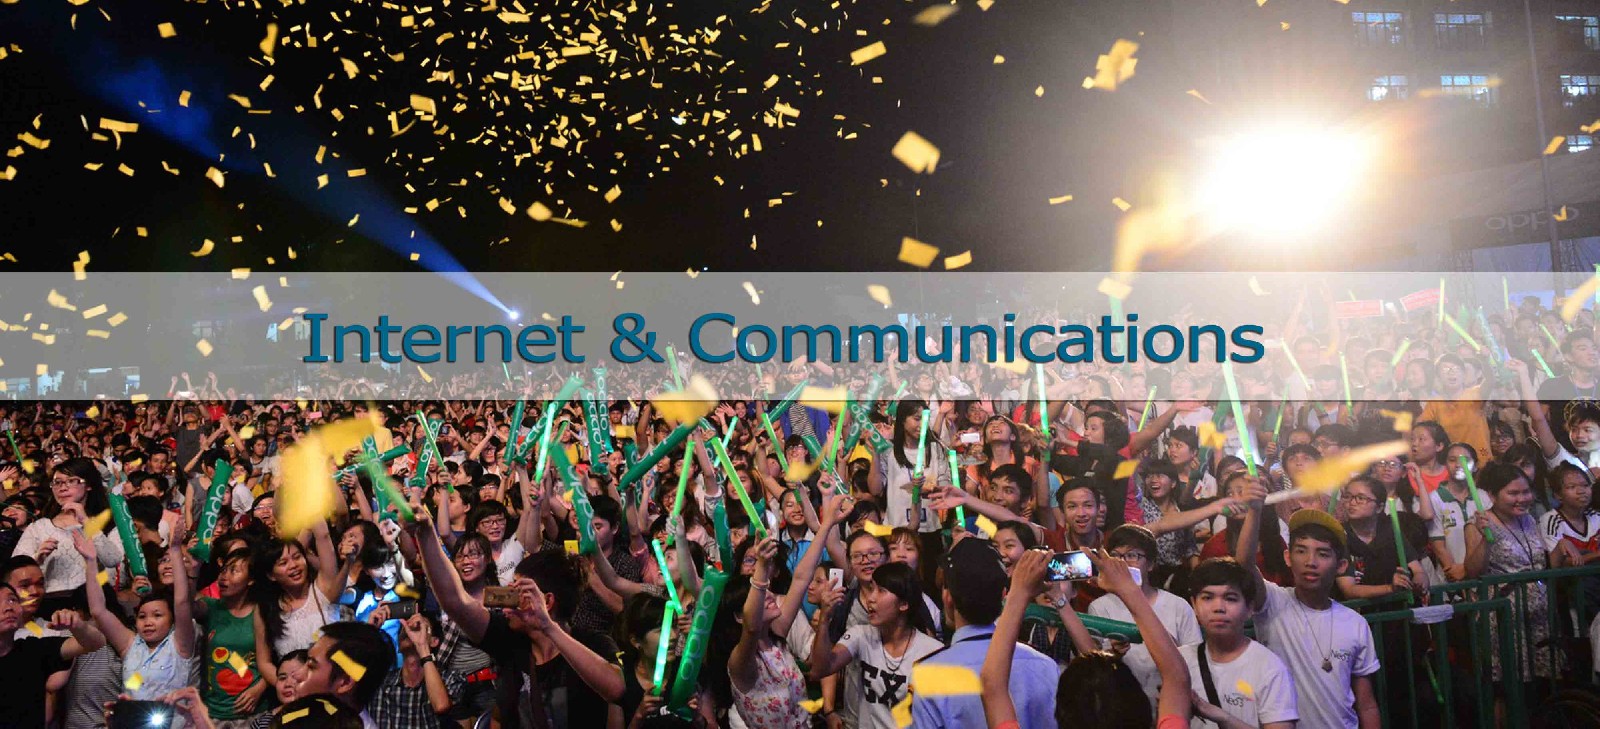 Internet & Communications